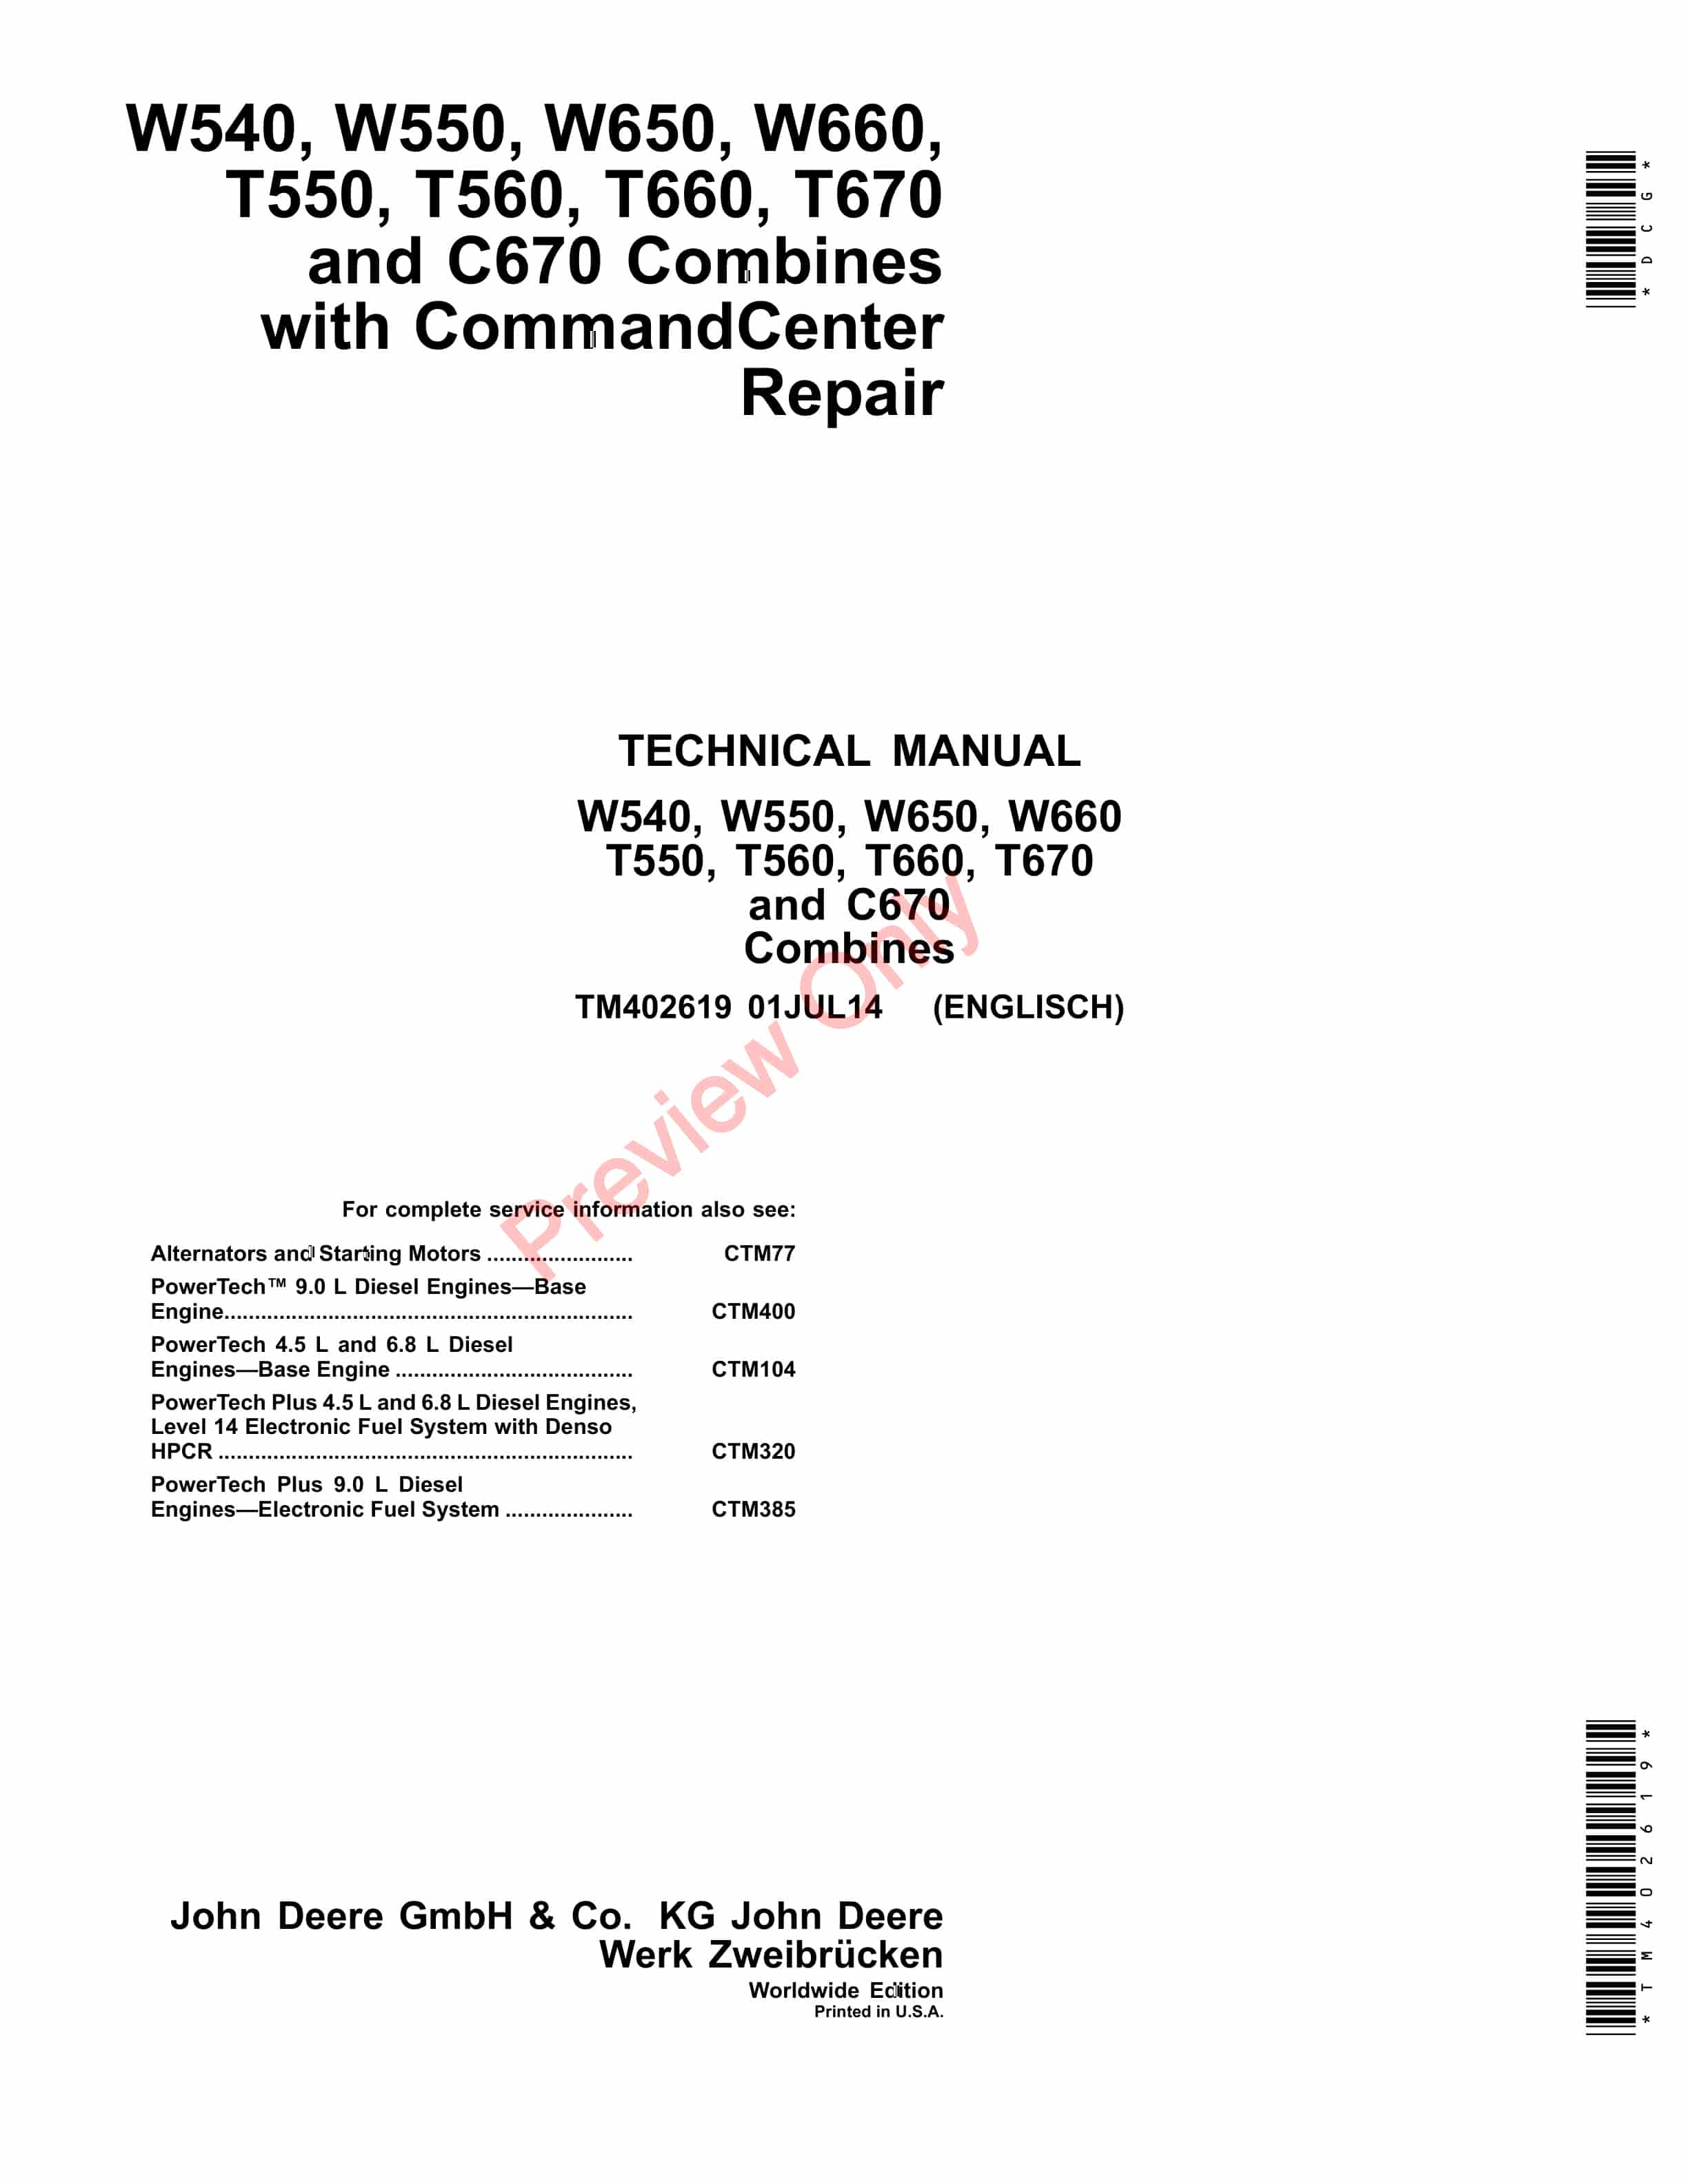 John Deere W540 W550 W560 W660 T550 T560 T660 T670 C670 Combine Technical Manual TM402619 01JUL14 1